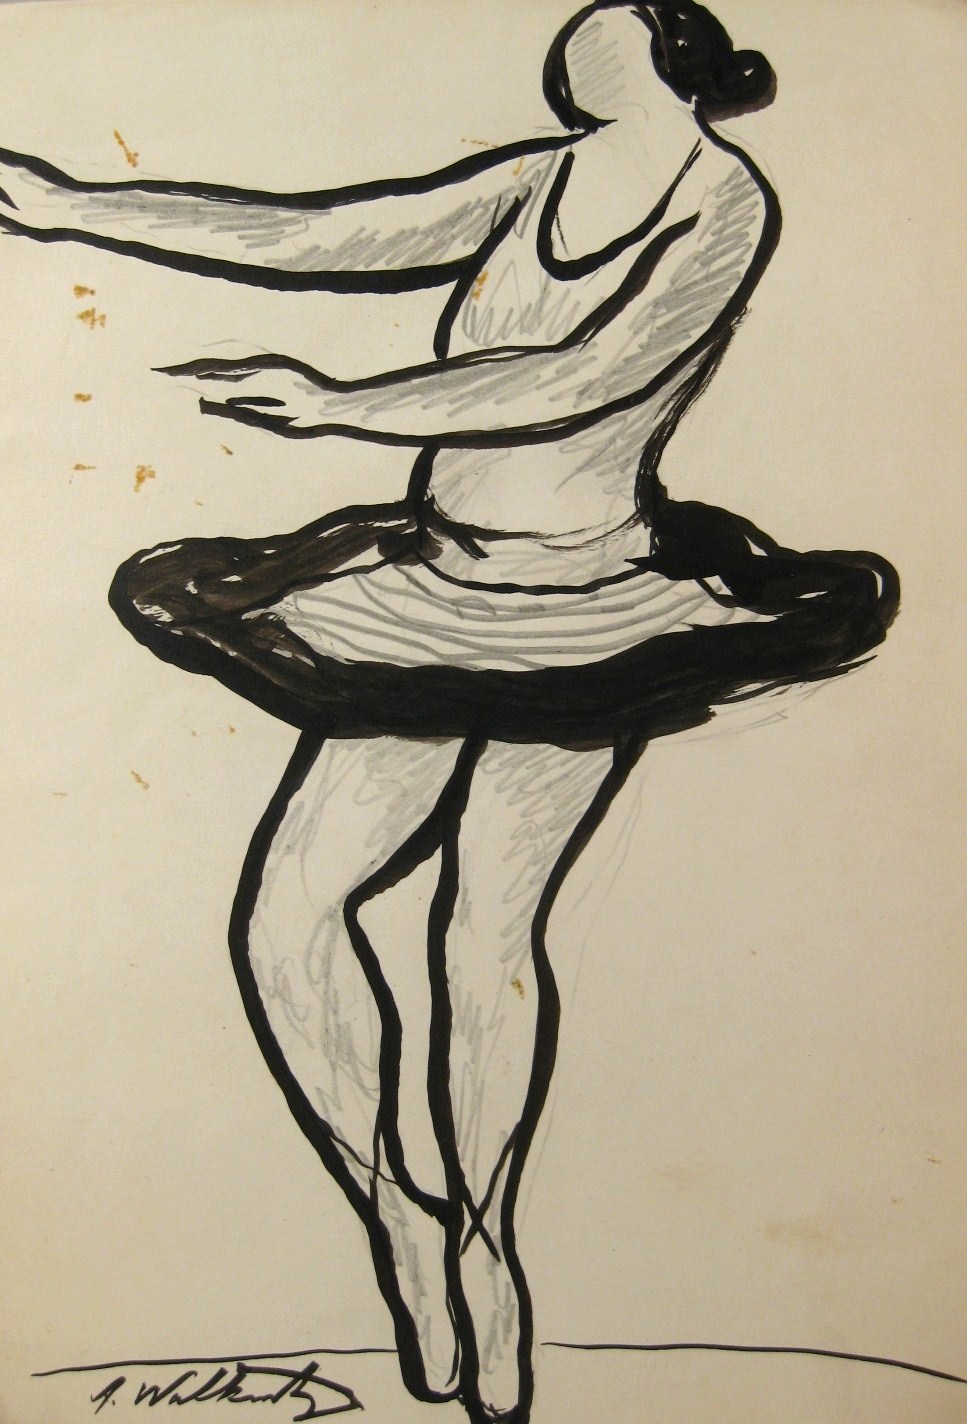 Abraham Walkowitz, Russian- American, 1878-1965, Dancer